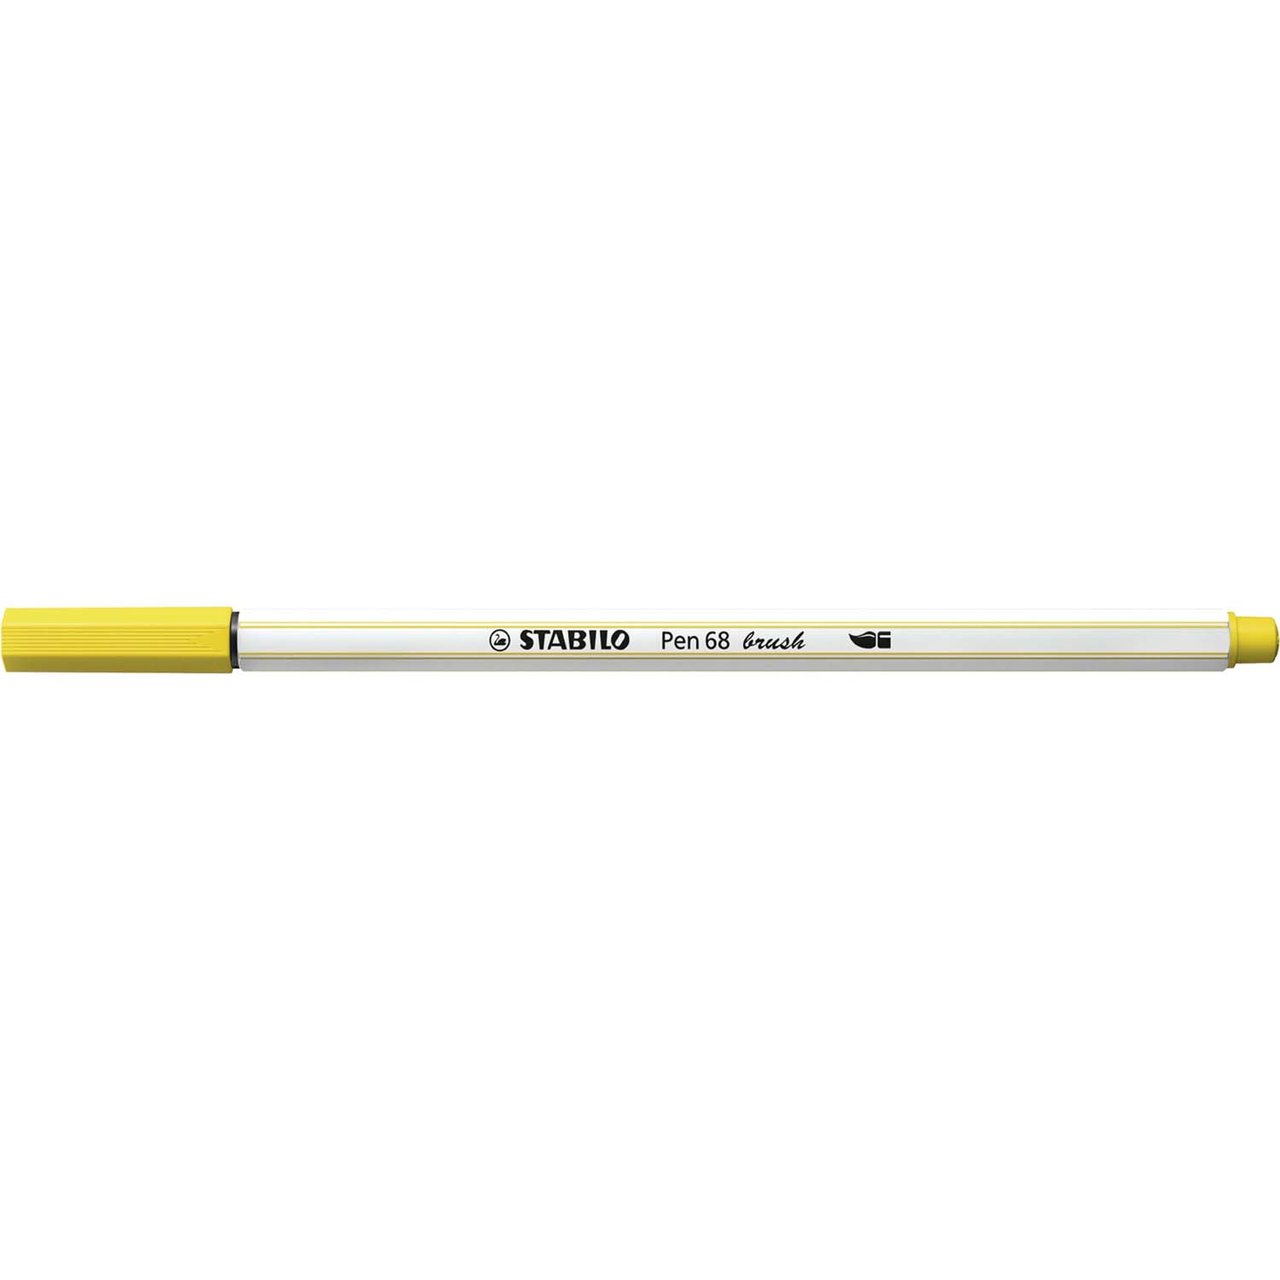 STABILO Pen 68 brush gelb